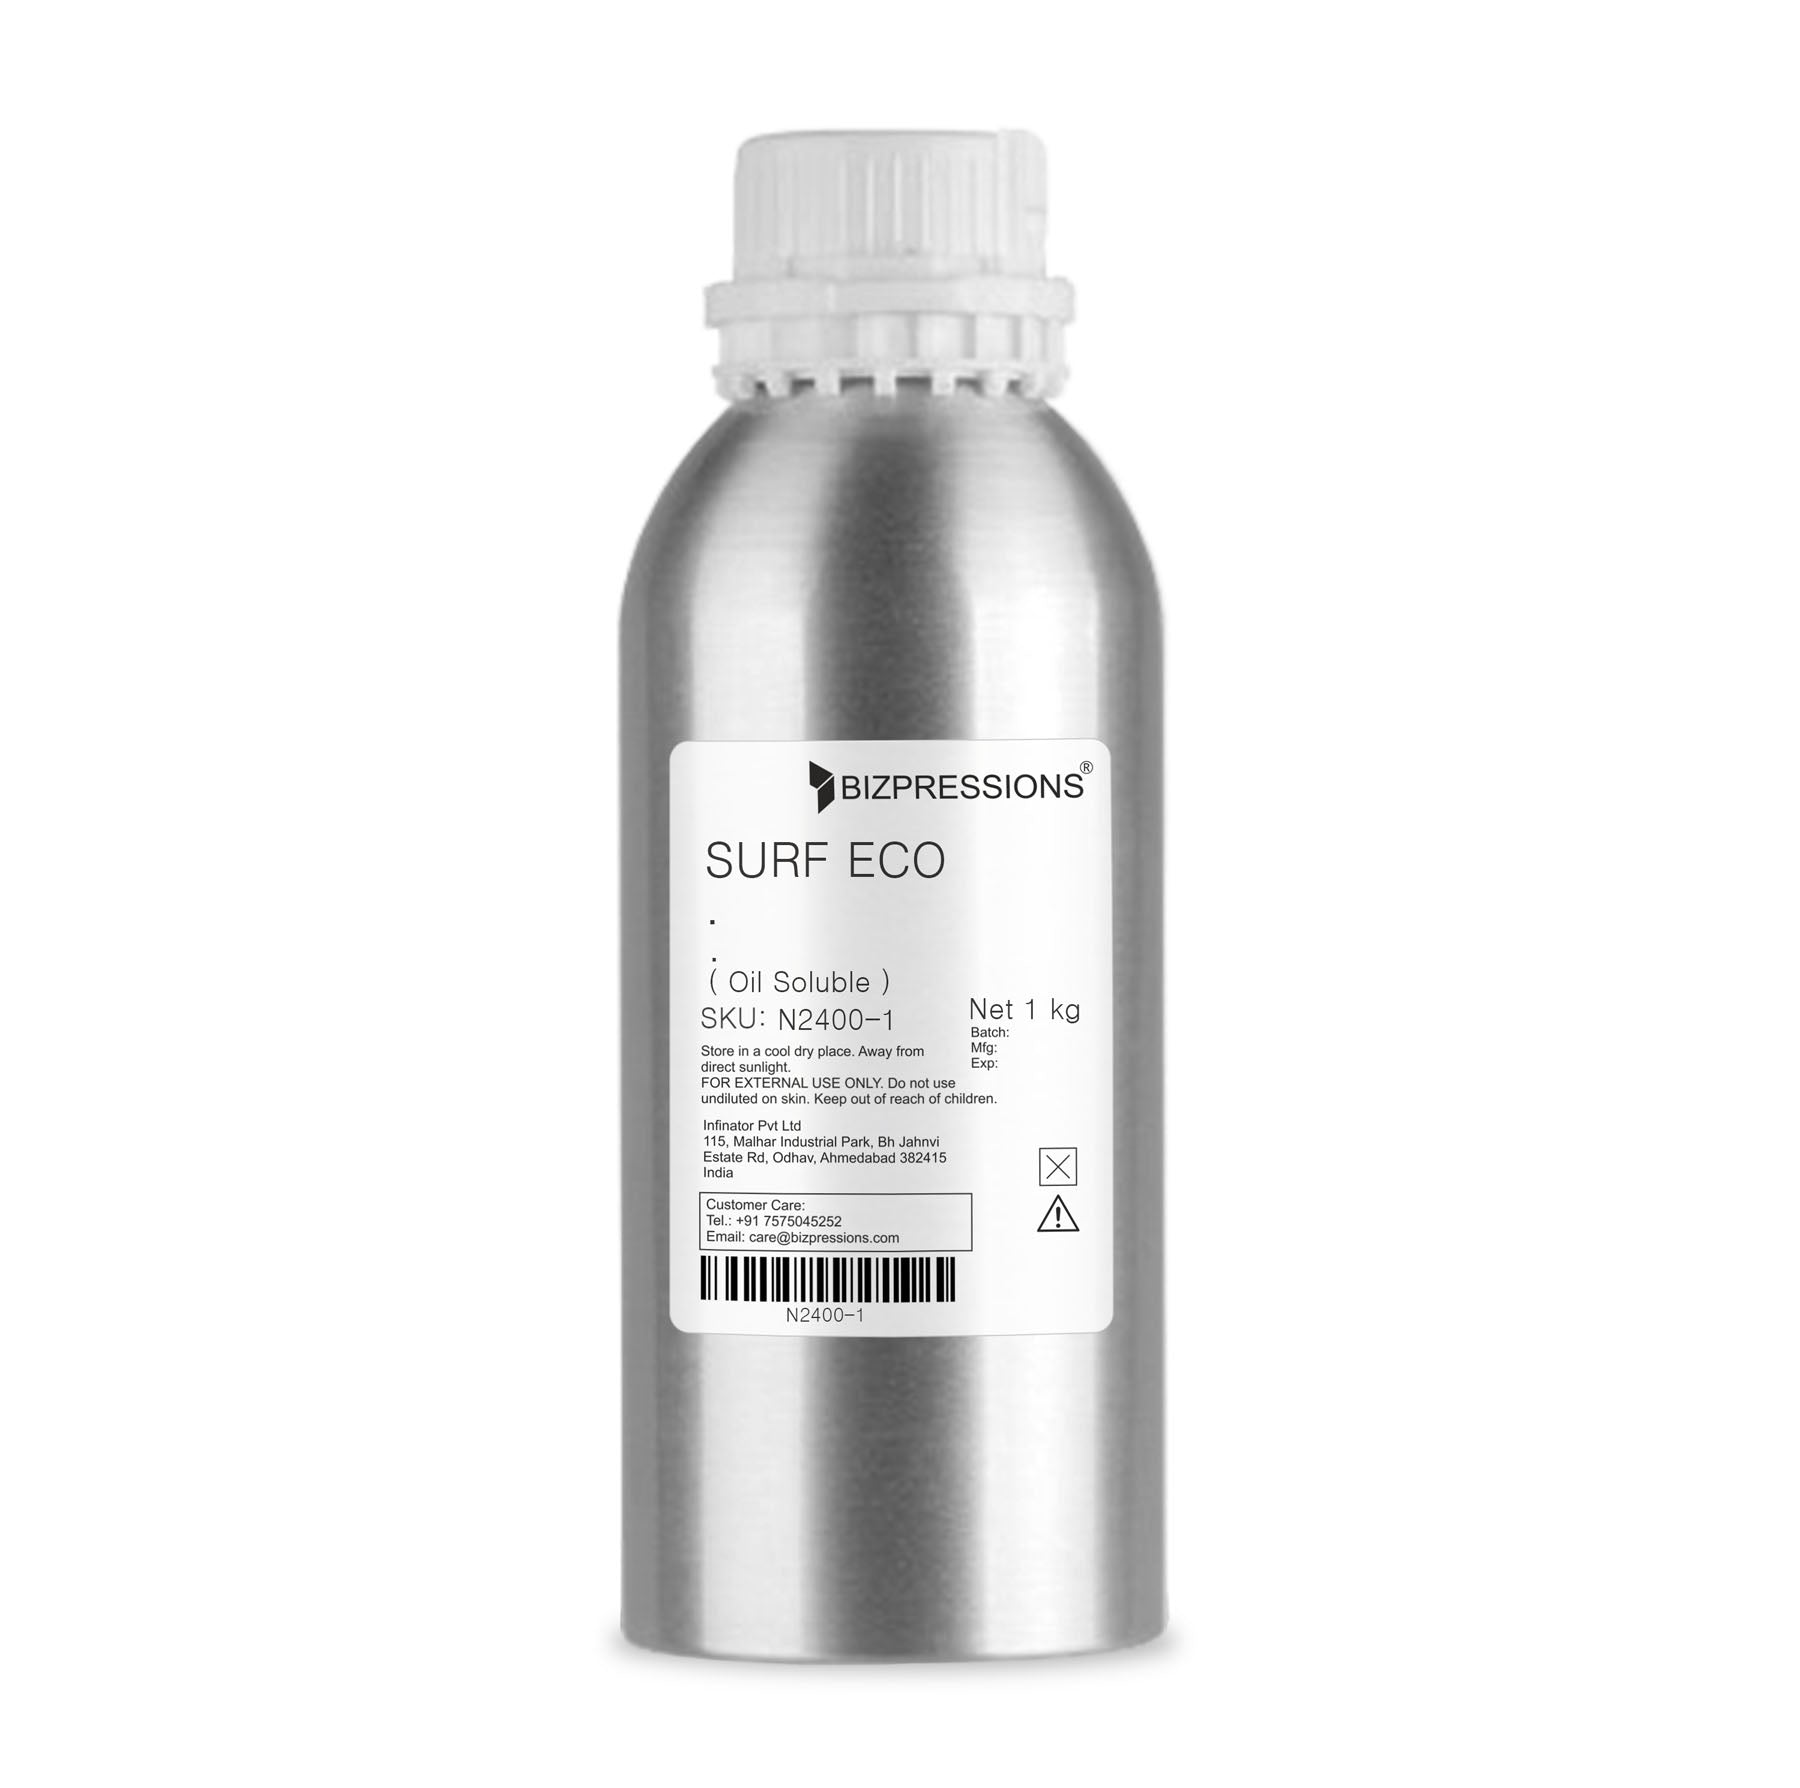 SURF ECO - Fragrance ( Oil Soluble ) - 1 kg